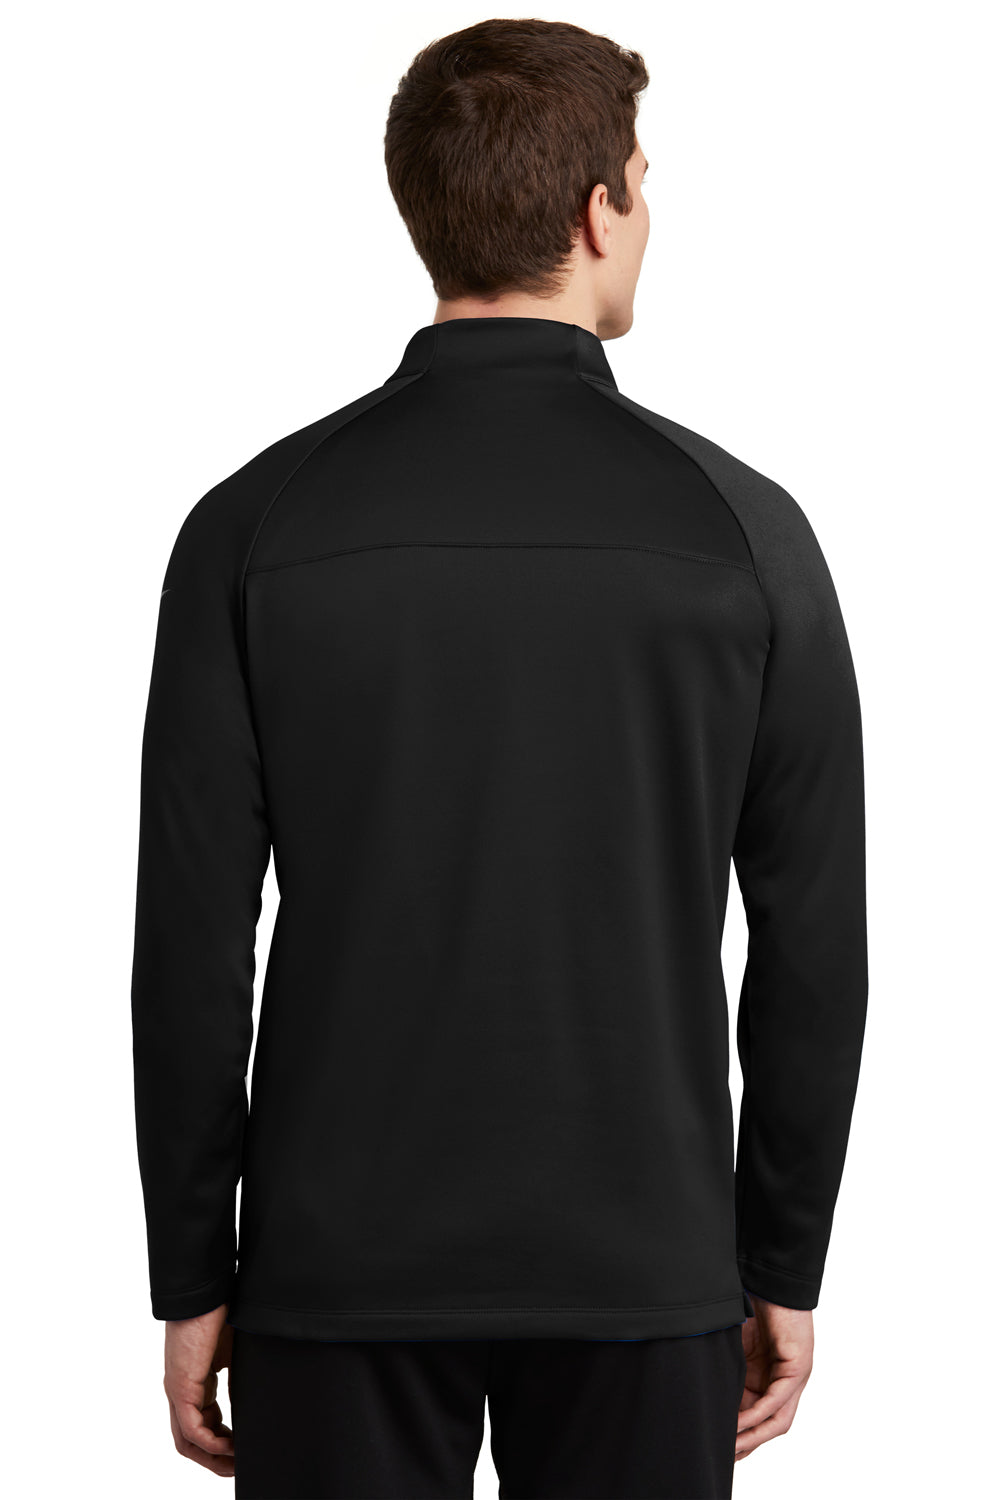 Nike NKAH6254 Mens Therma-Fit Moisture Wicking Fleece 1/4 Zip Sweatshirt Black Model Back